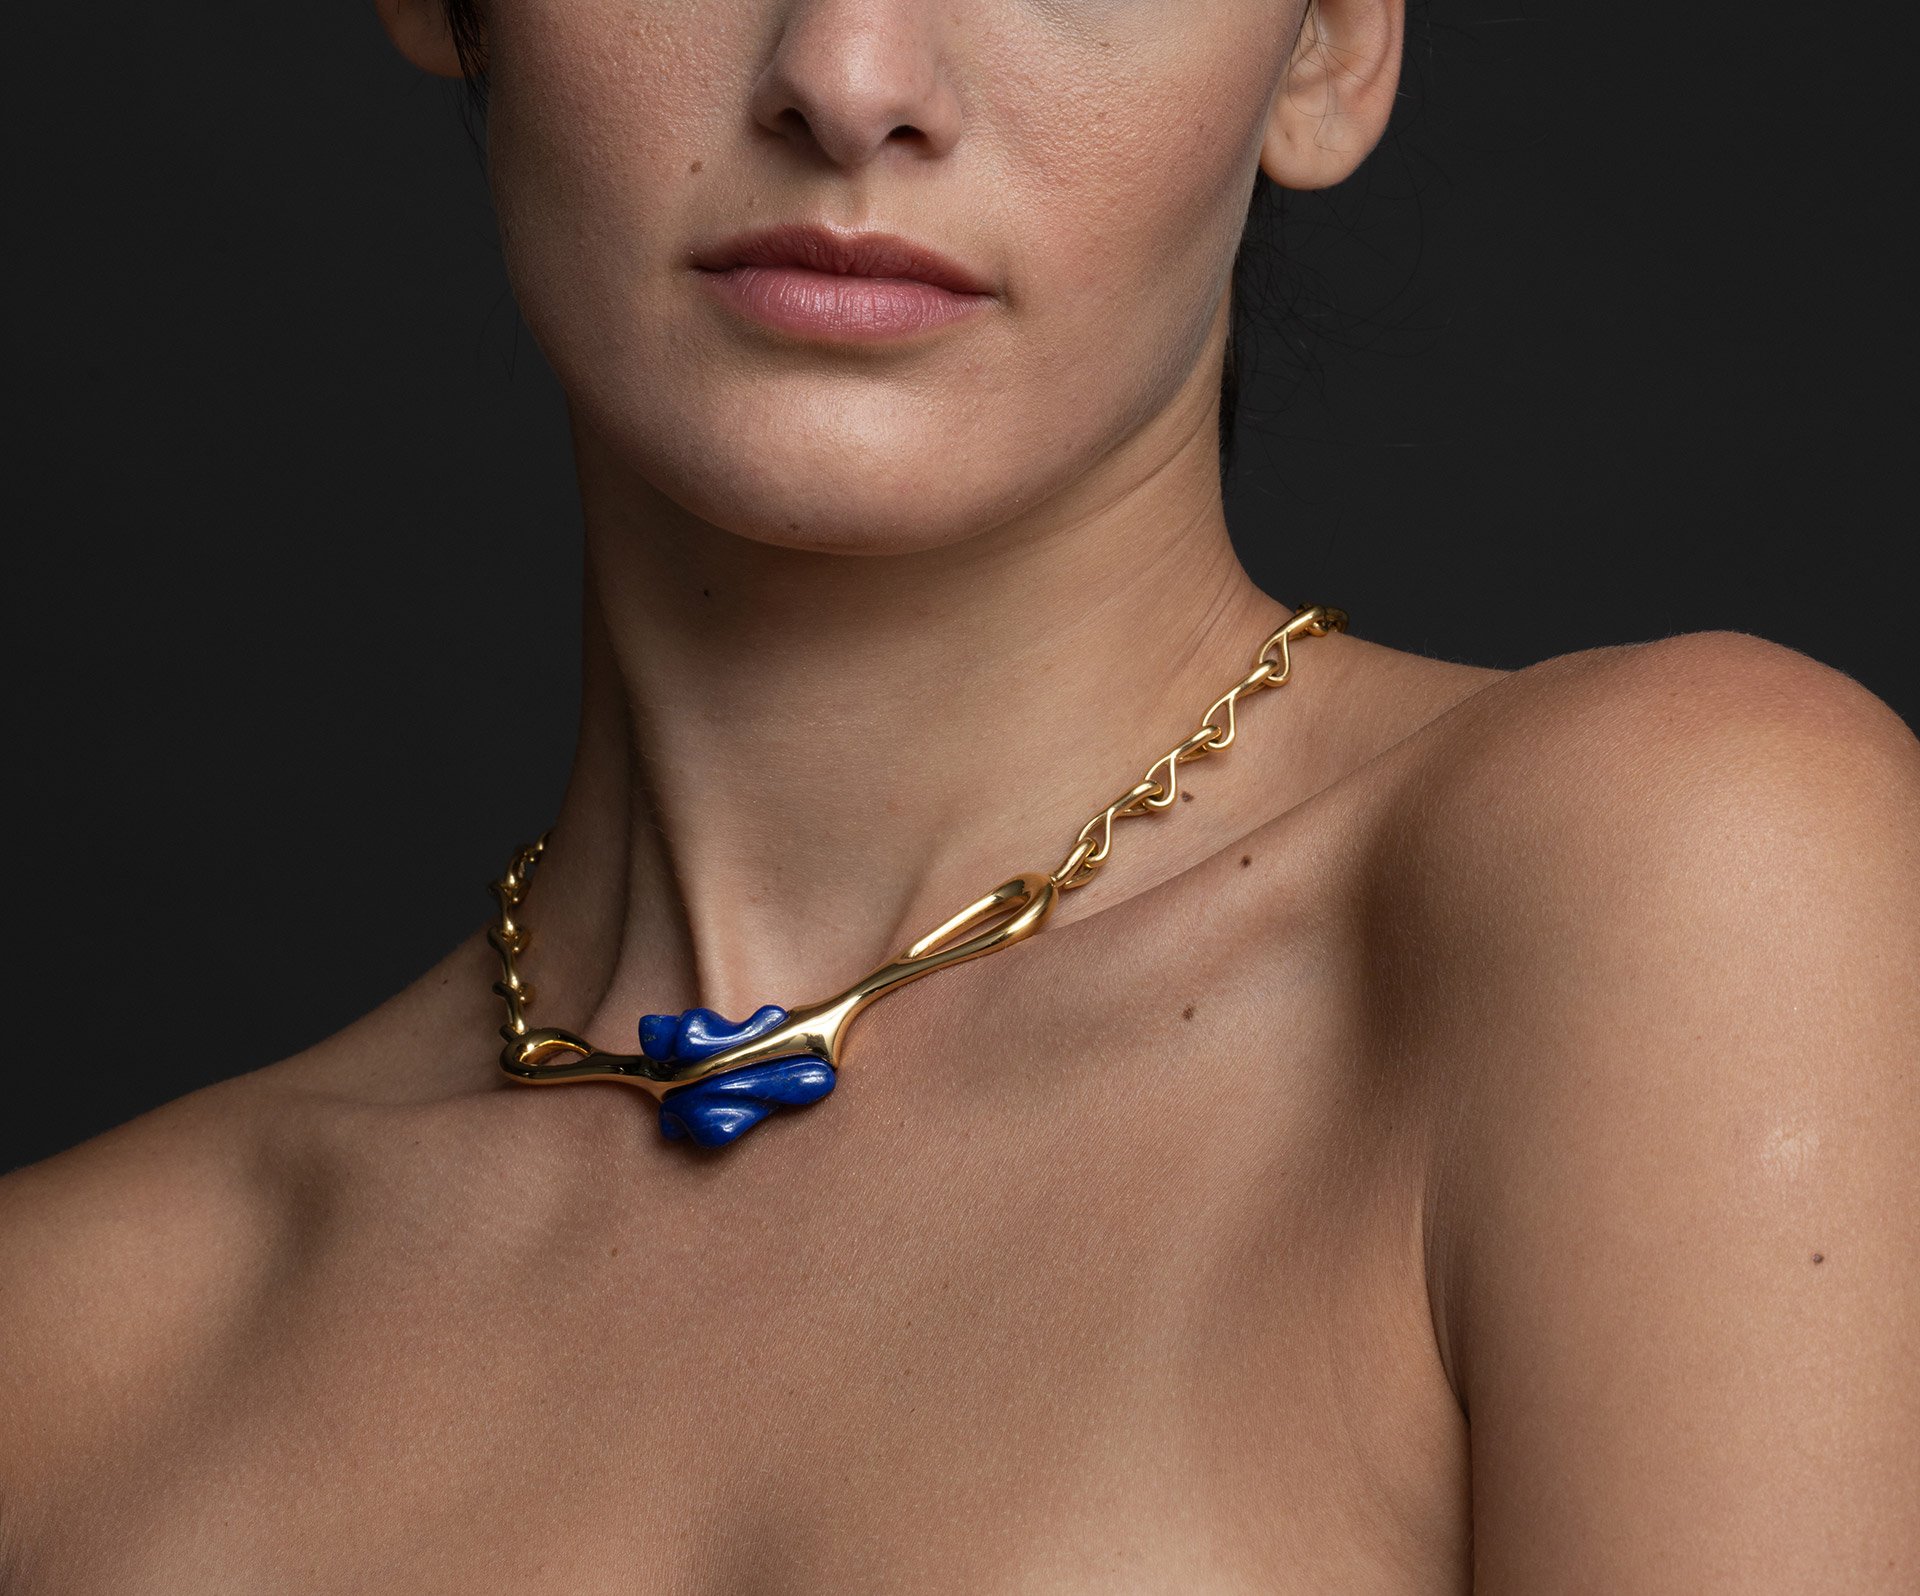 DULCE-egypt-necklaces-collection-julio-martinez-barnetche-marion-friedmann-gallery-LR-egypt14-cut.jpg